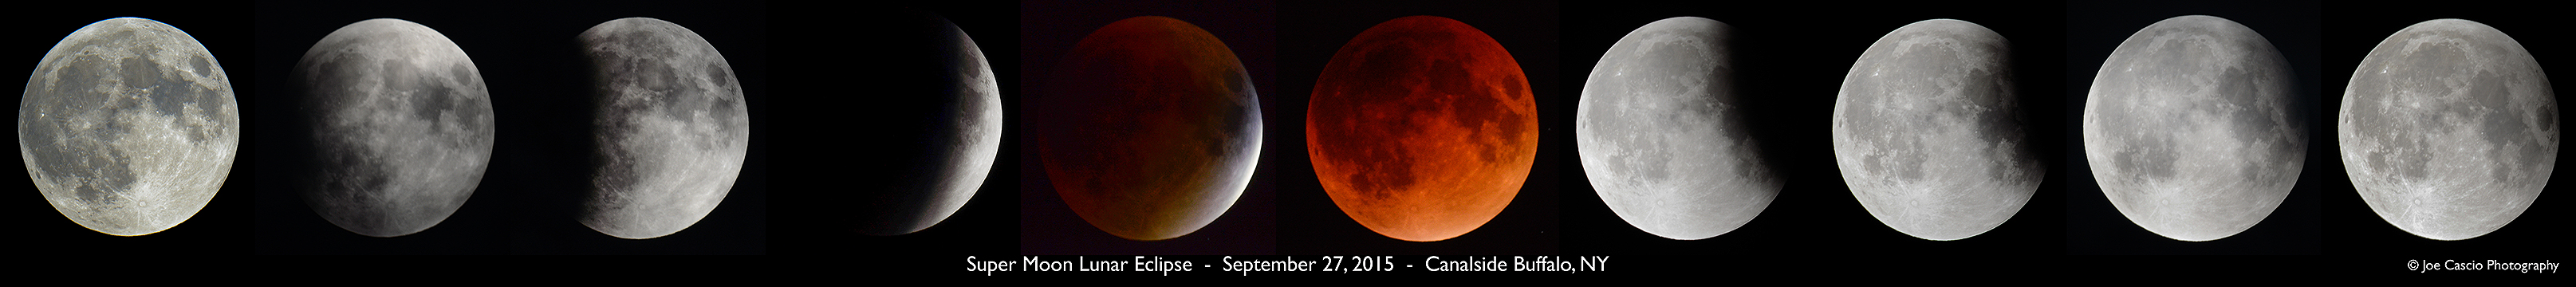 2015_Super_Moon_Eclipse_jcascio.jpg